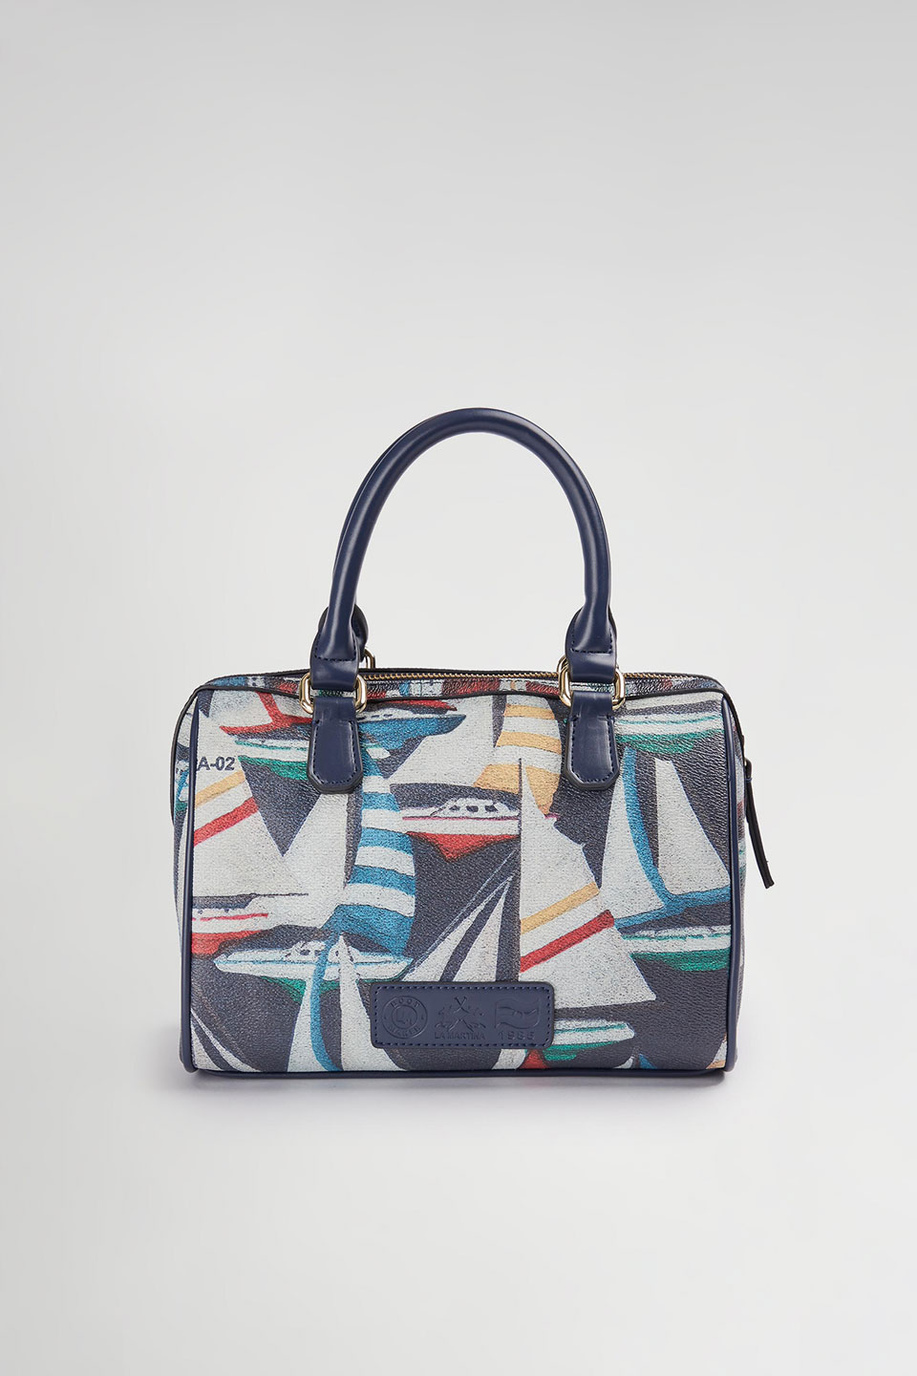 Tasche aus PU-Gewebe - Damen lederwaren | La Martina - Official Online Shop